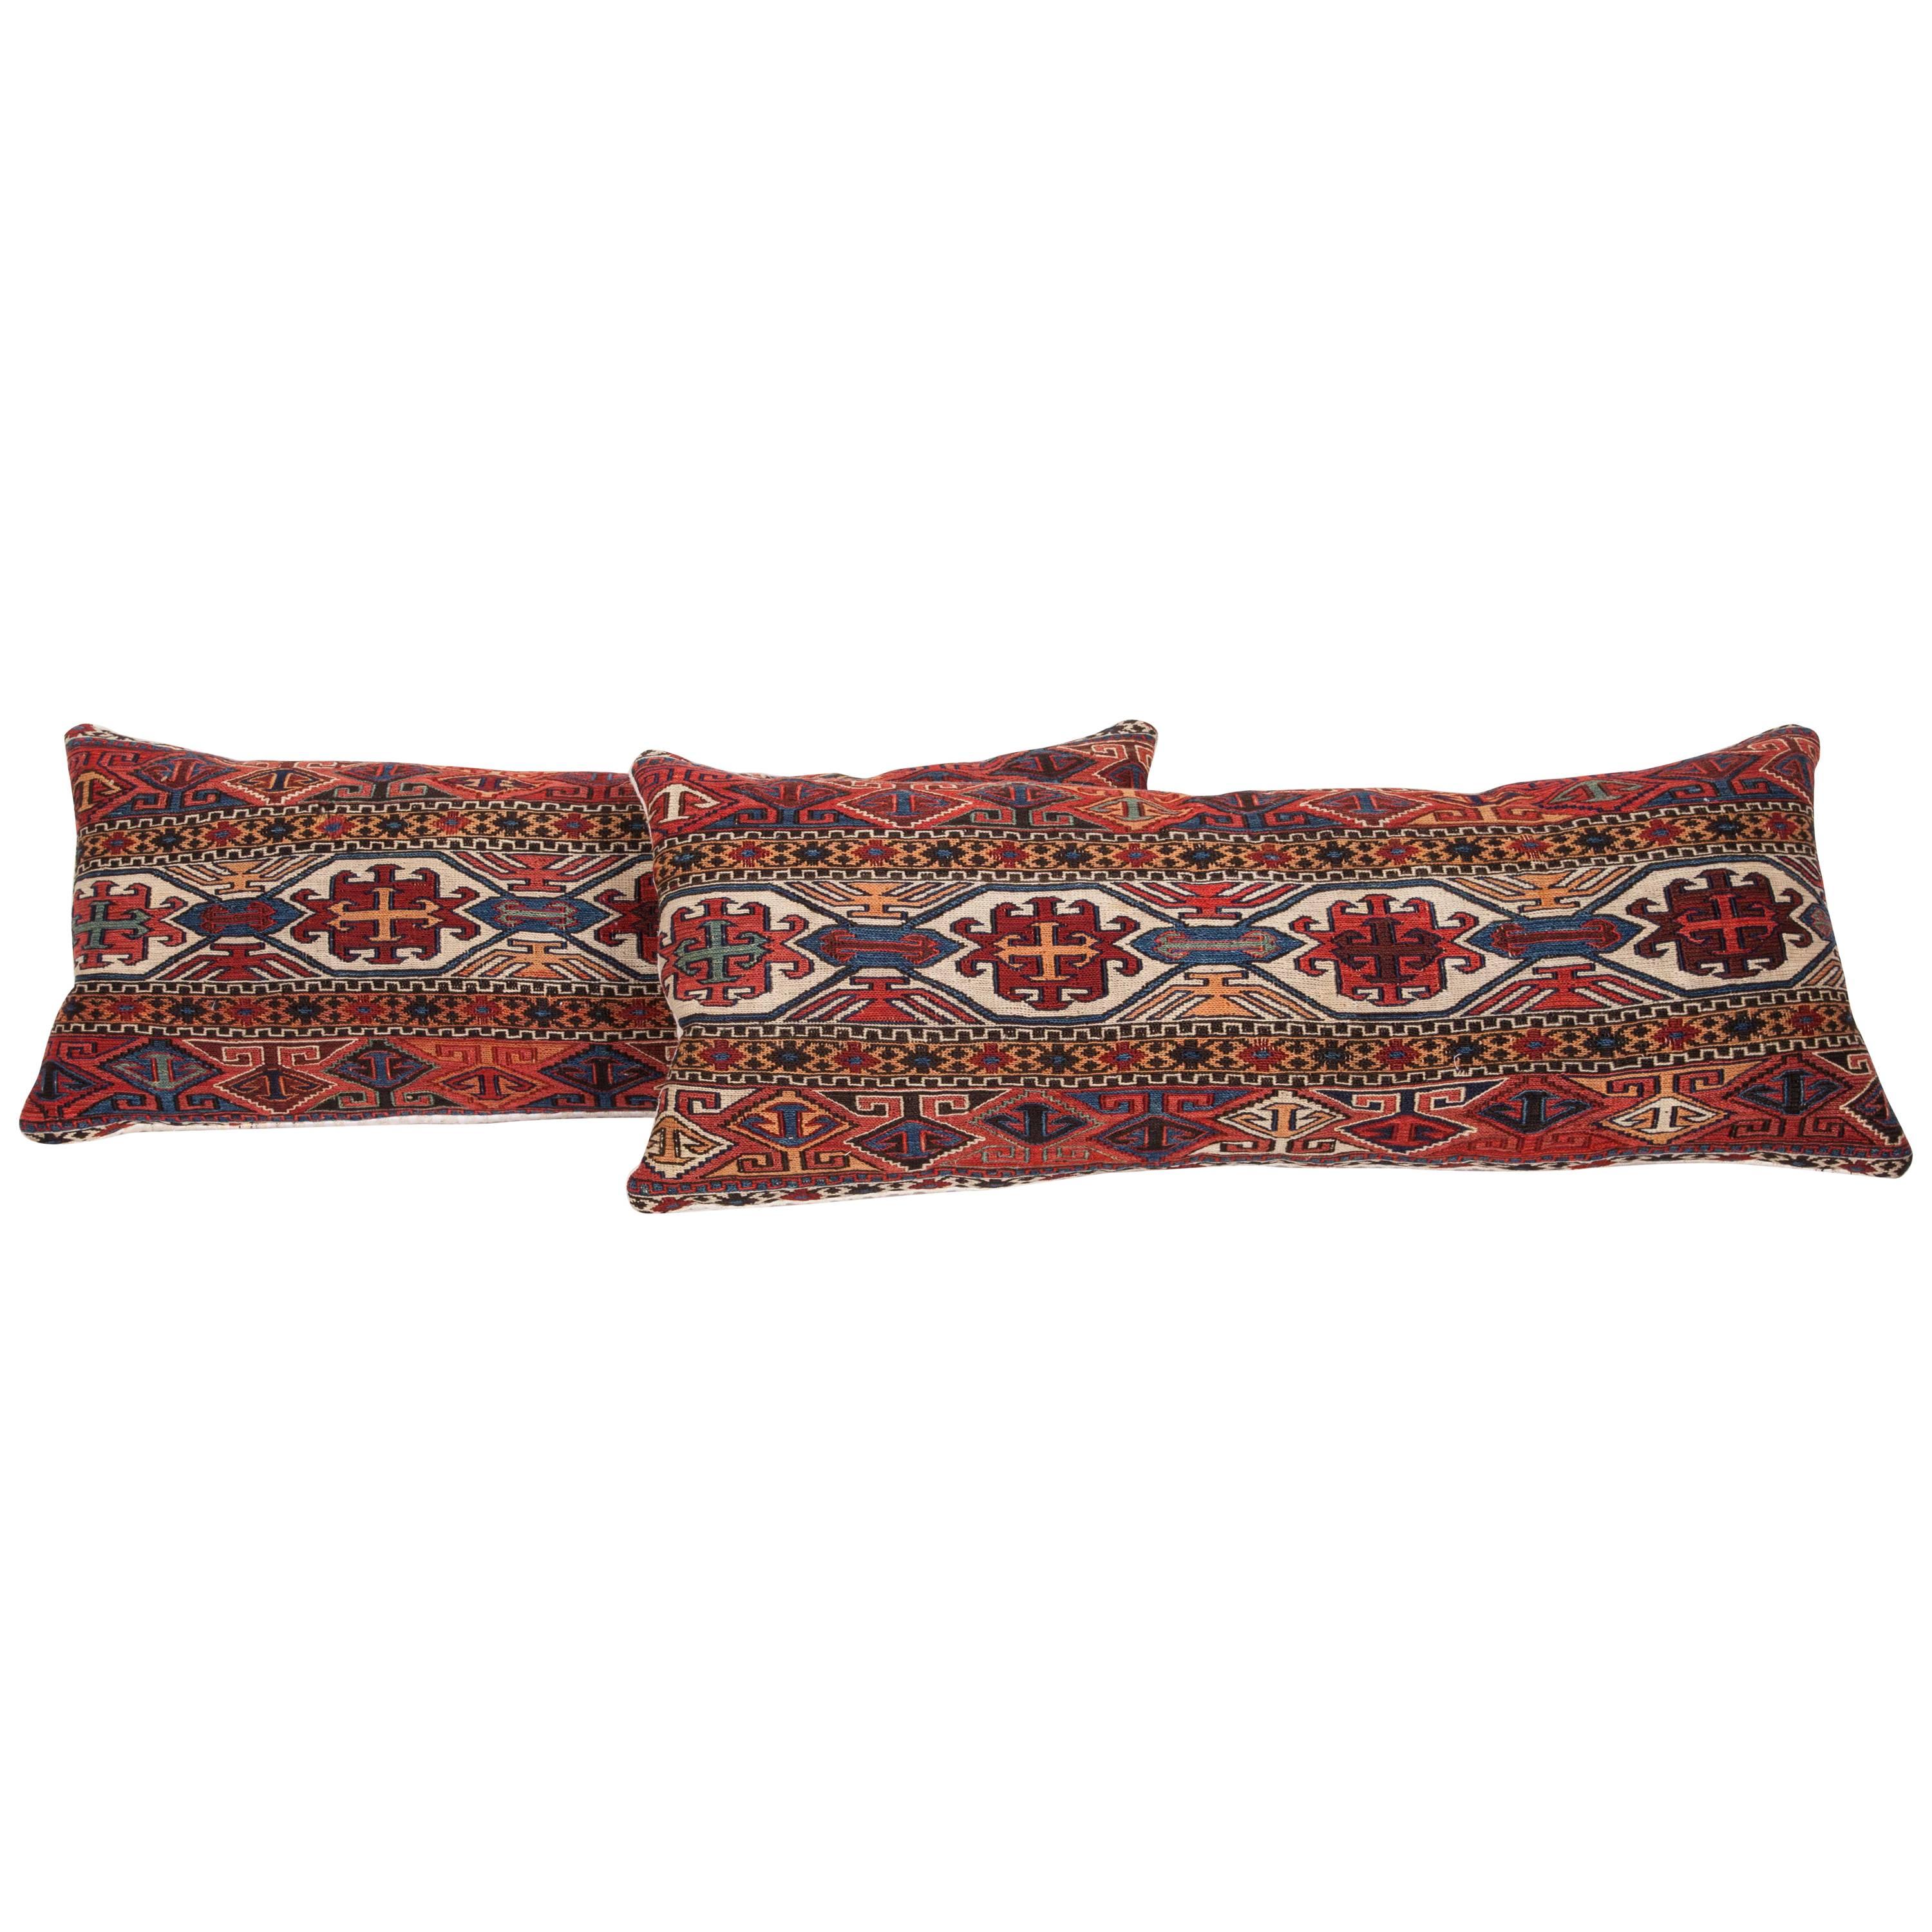 Antique Sumak Pillows Made Out of Late 19th Century Shasavan Mafrash Panels